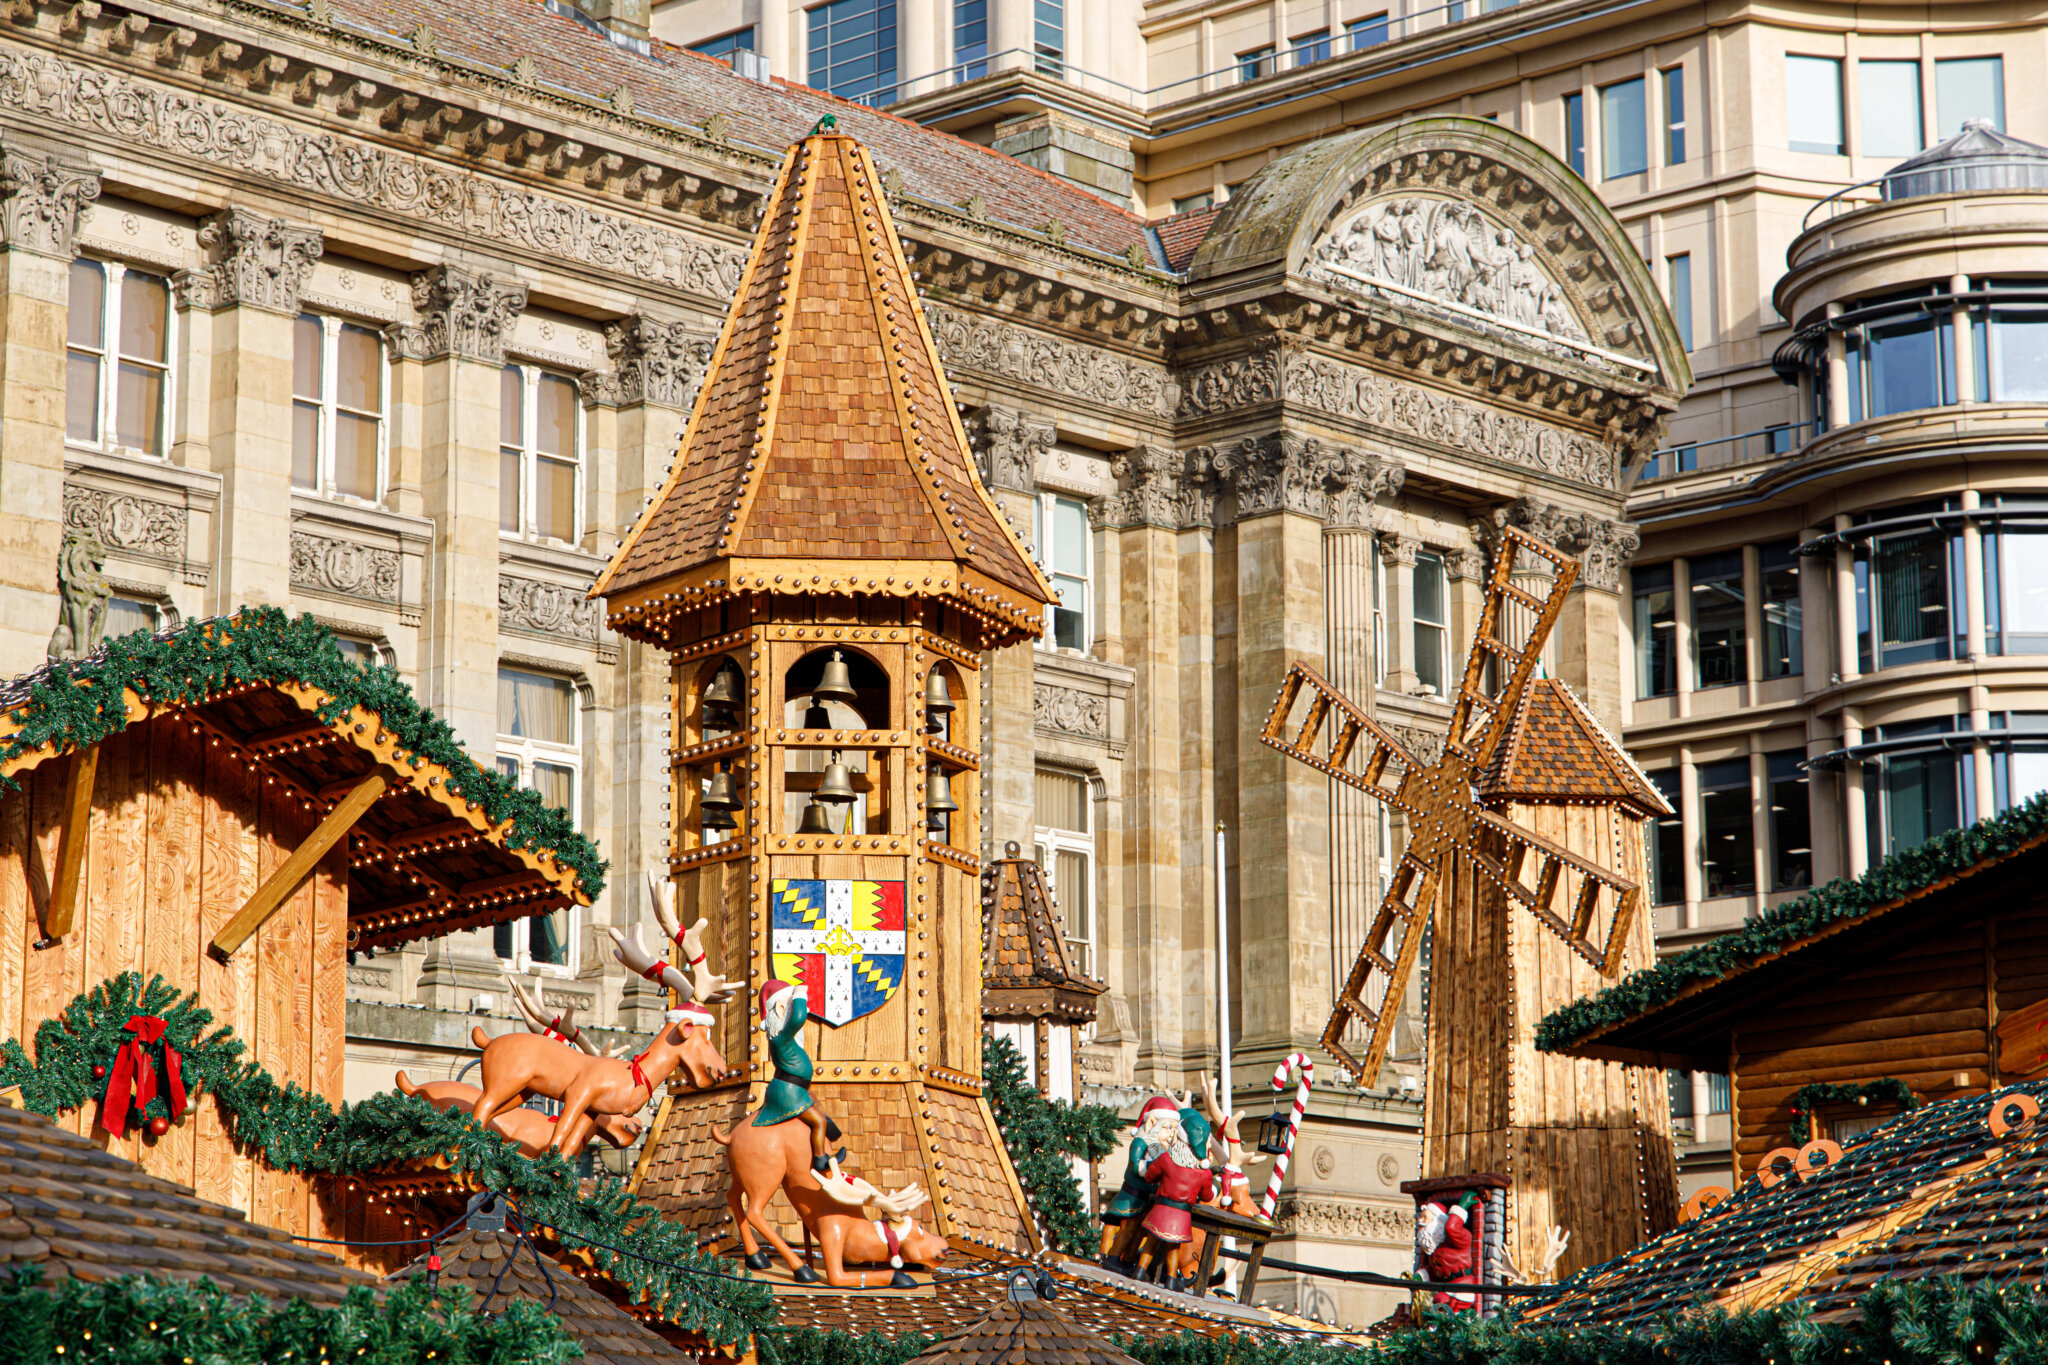 Birmingham Christmas Markets 2021 Dates, Hotels & More